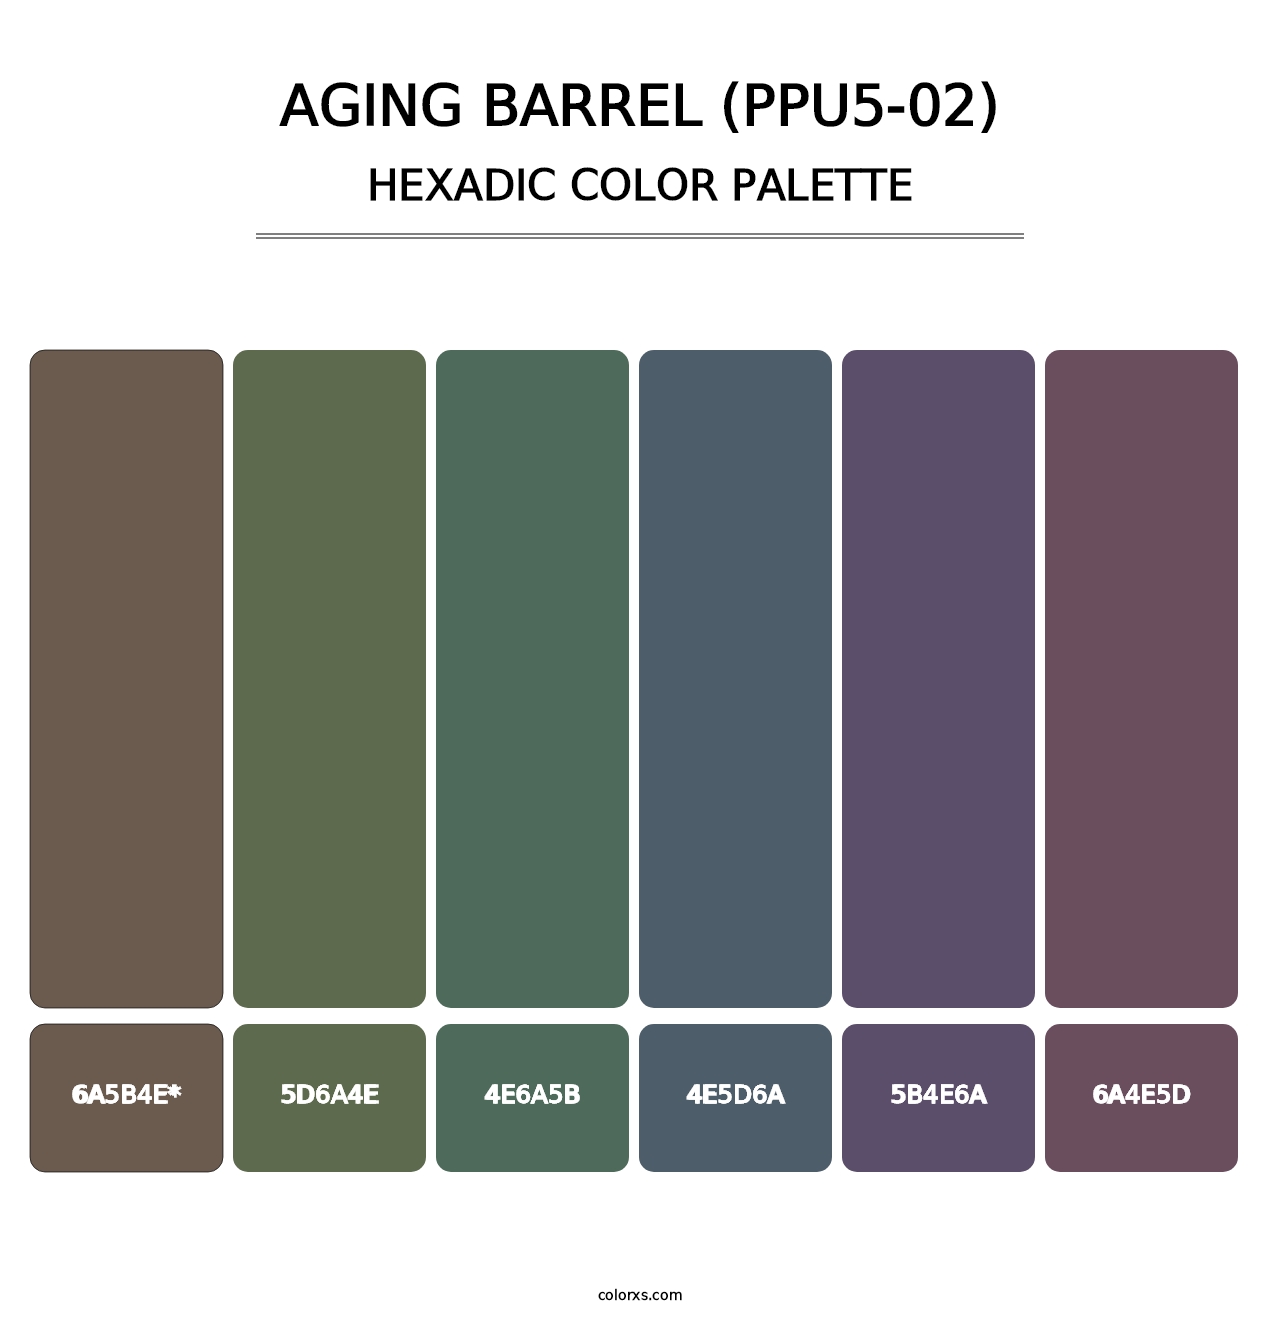 Aging Barrel (PPU5-02) - Hexadic Color Palette